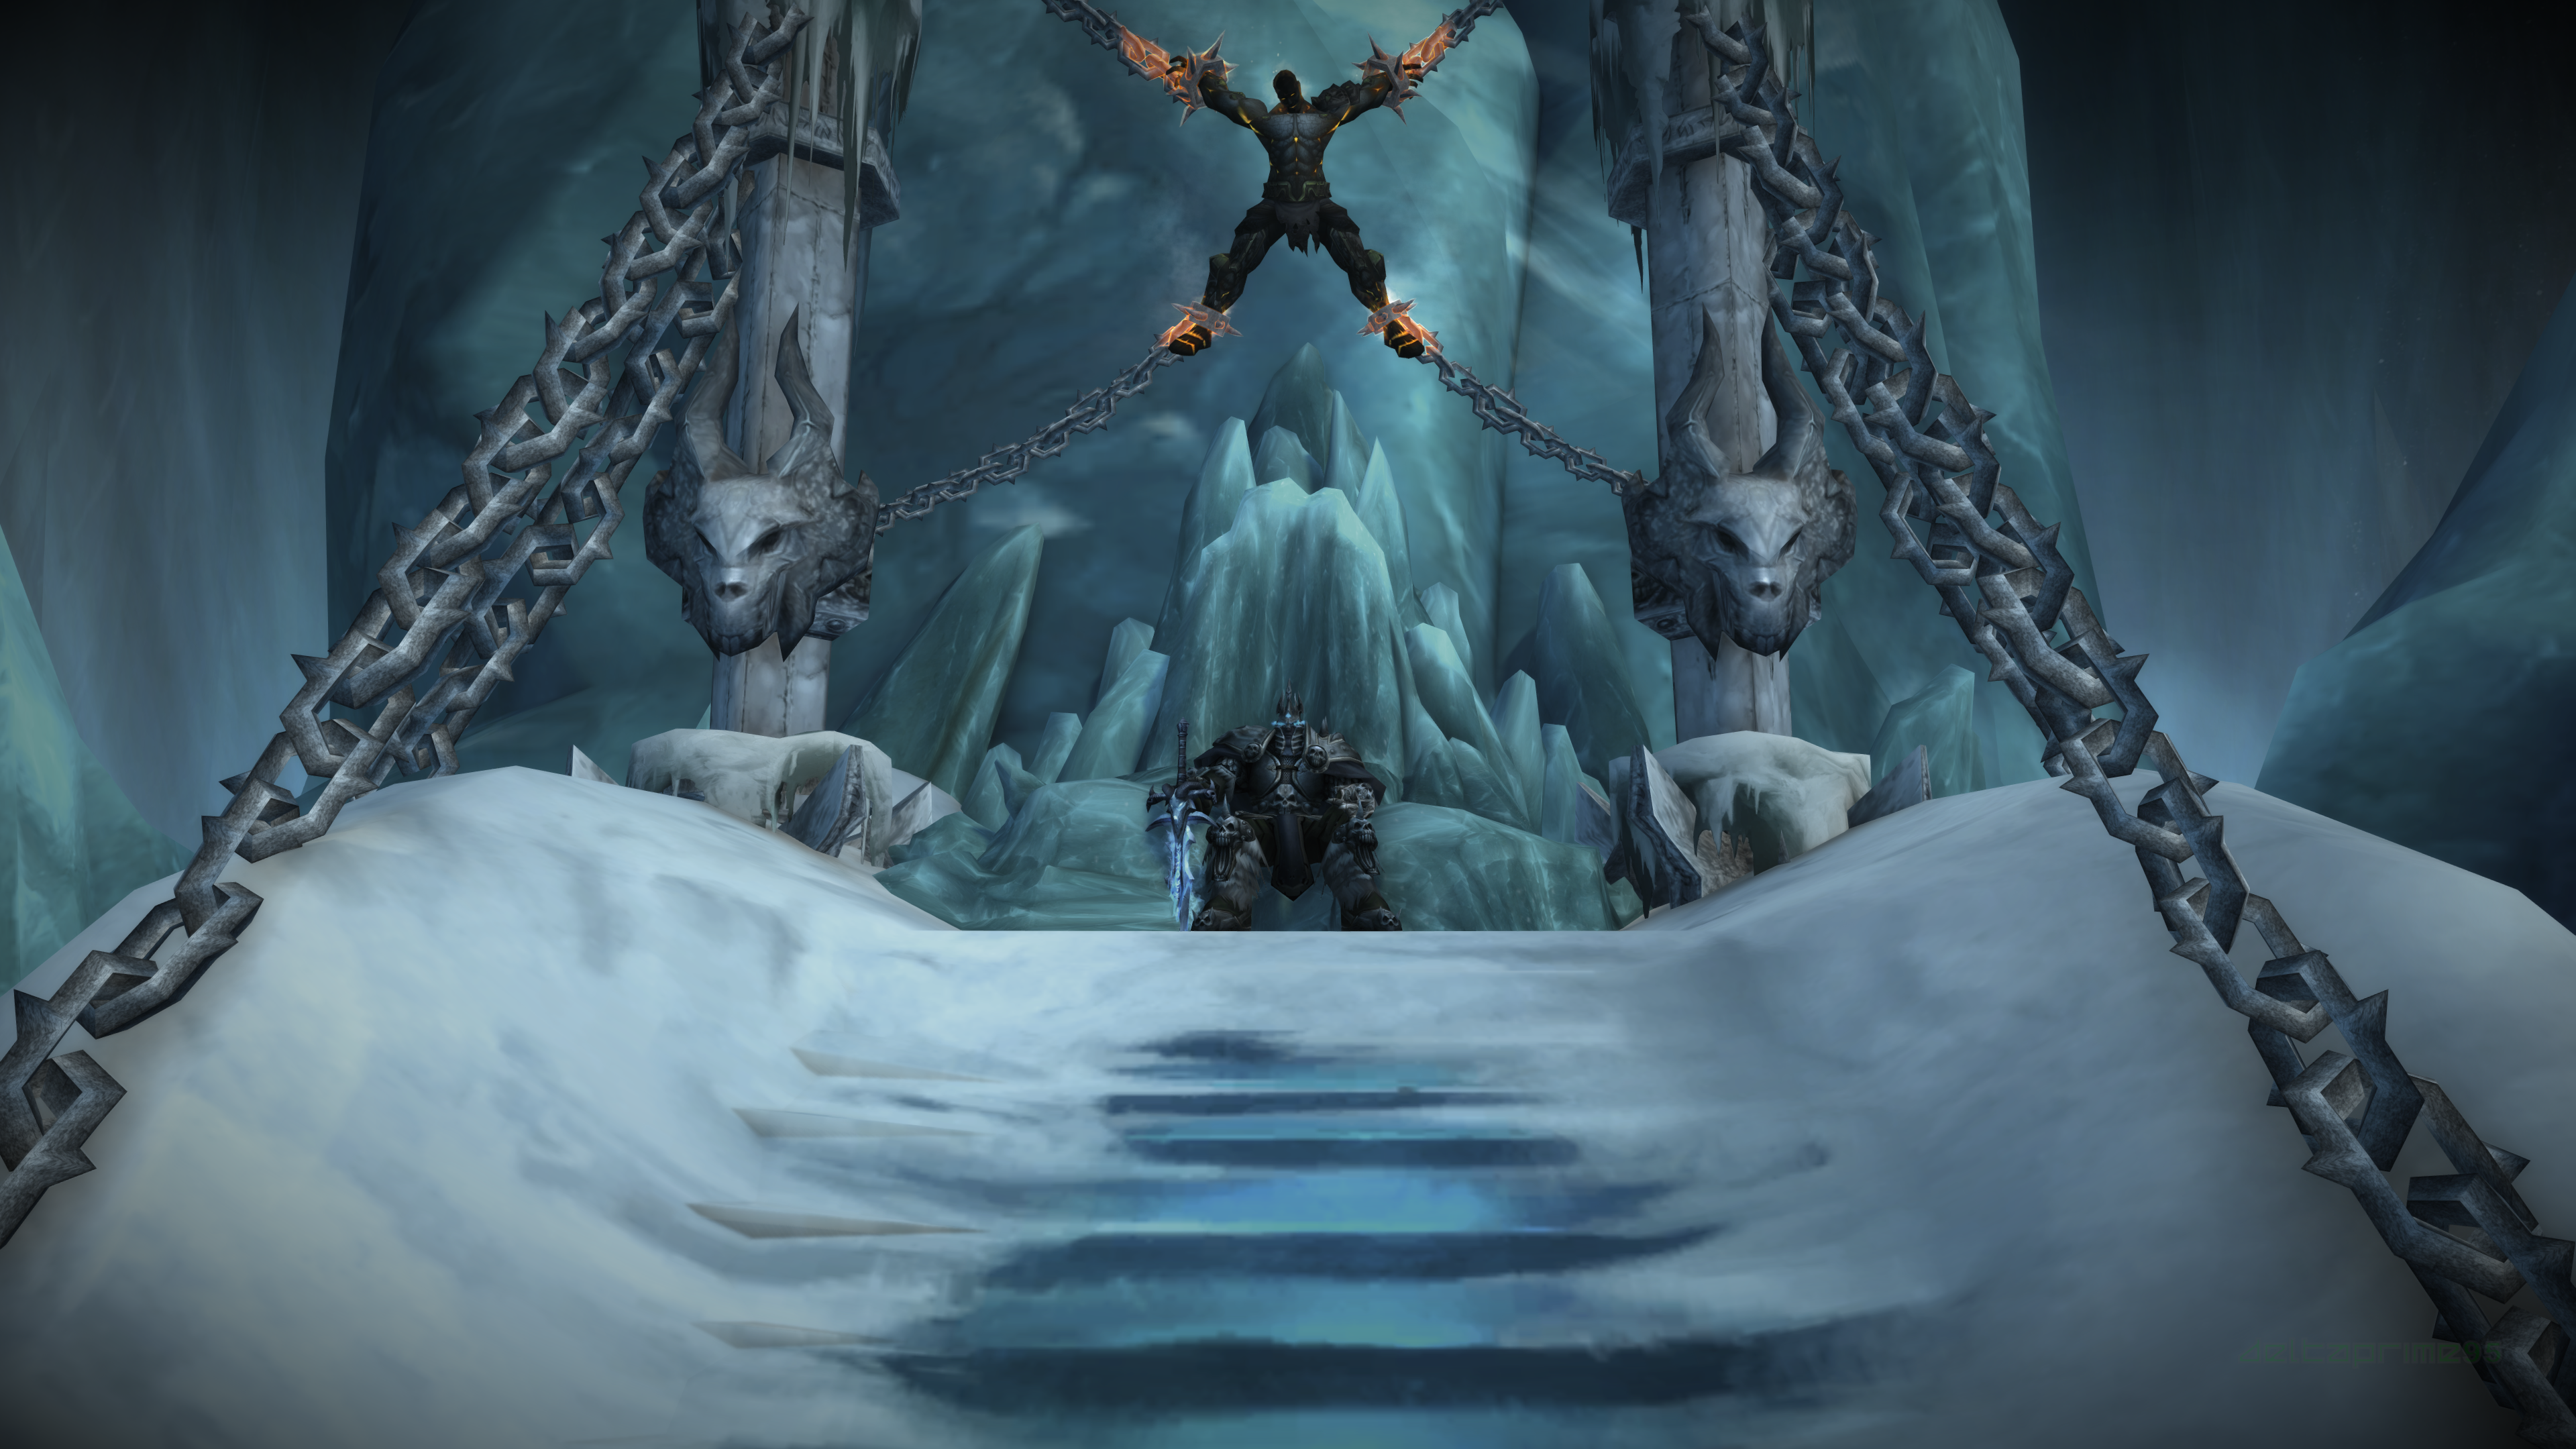 General 3840x2160 World of Warcraft: Wrath of the Lich King Arthas Menethil Bolvar Fordragon Icecrown Citadel The Frozen Throne PC gaming screen shot The Lich King Raid